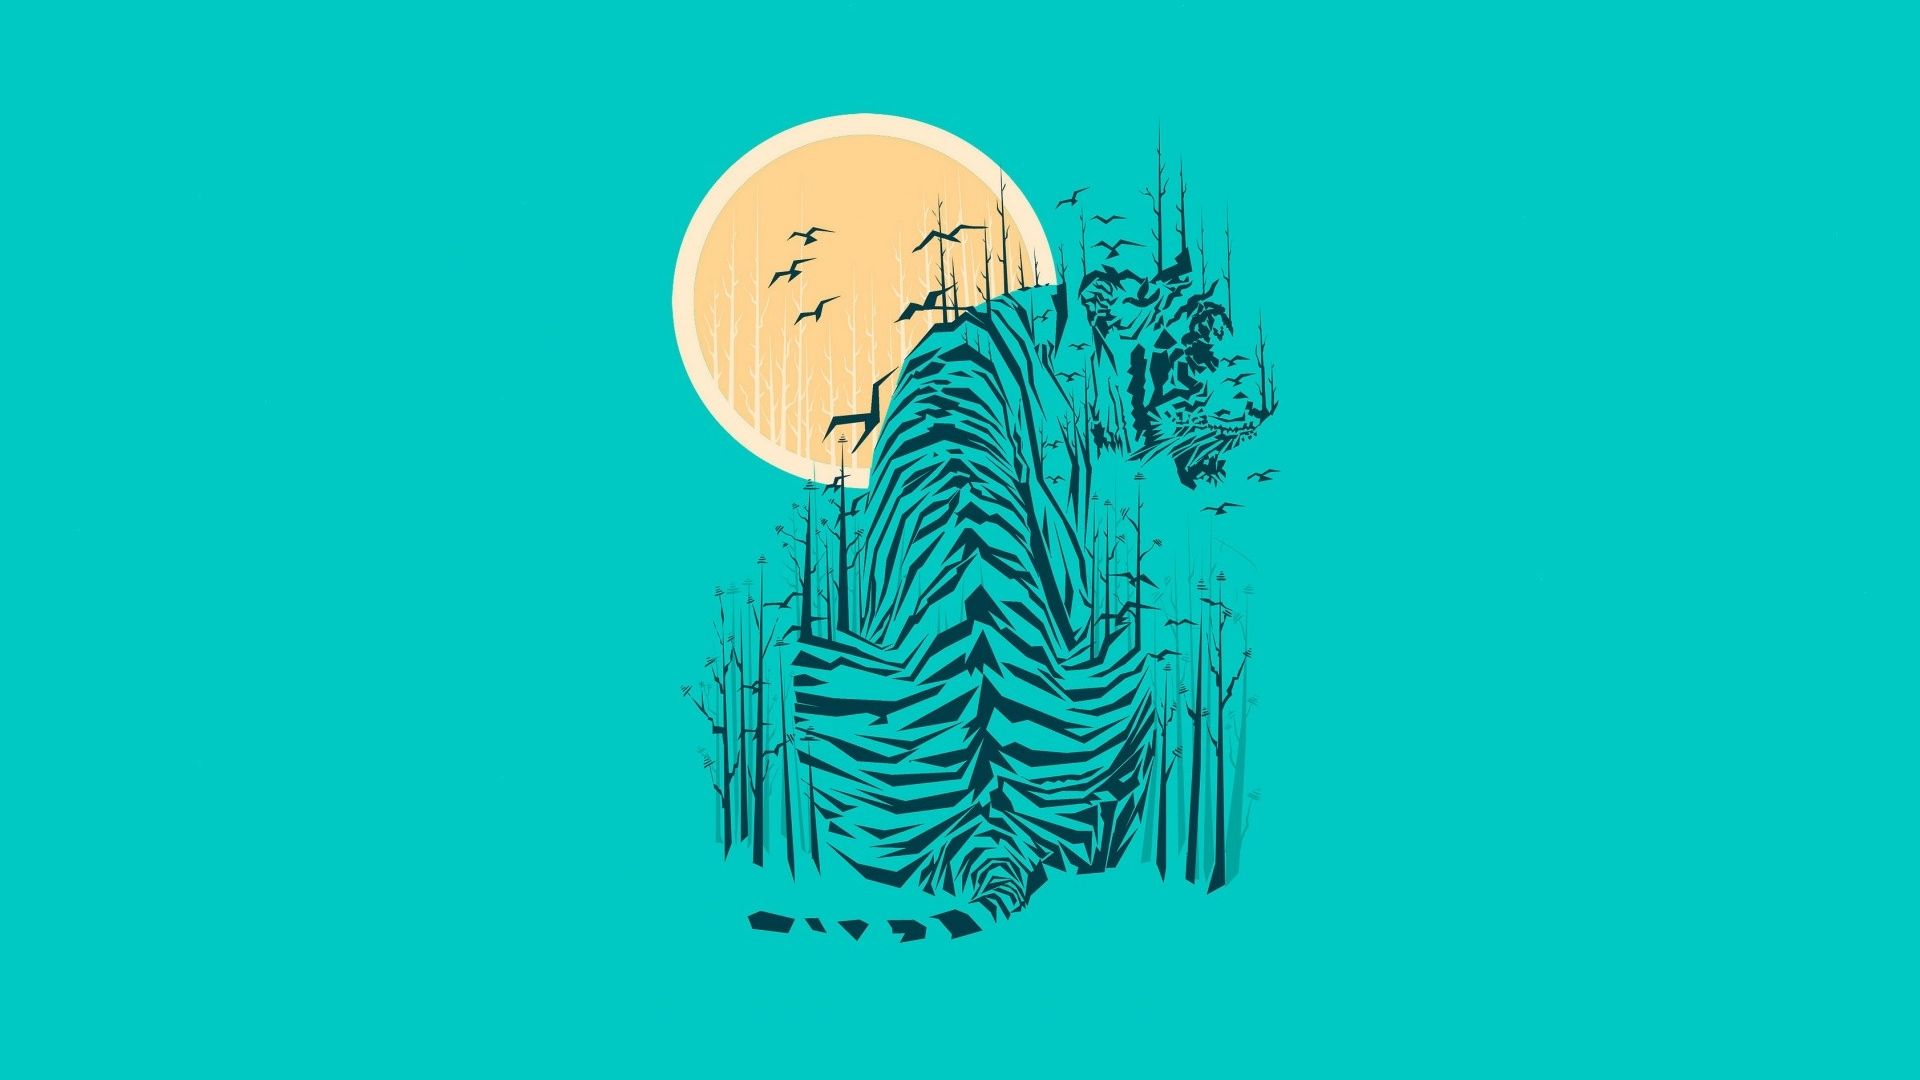 Wallpaper Tiger, moon artwork